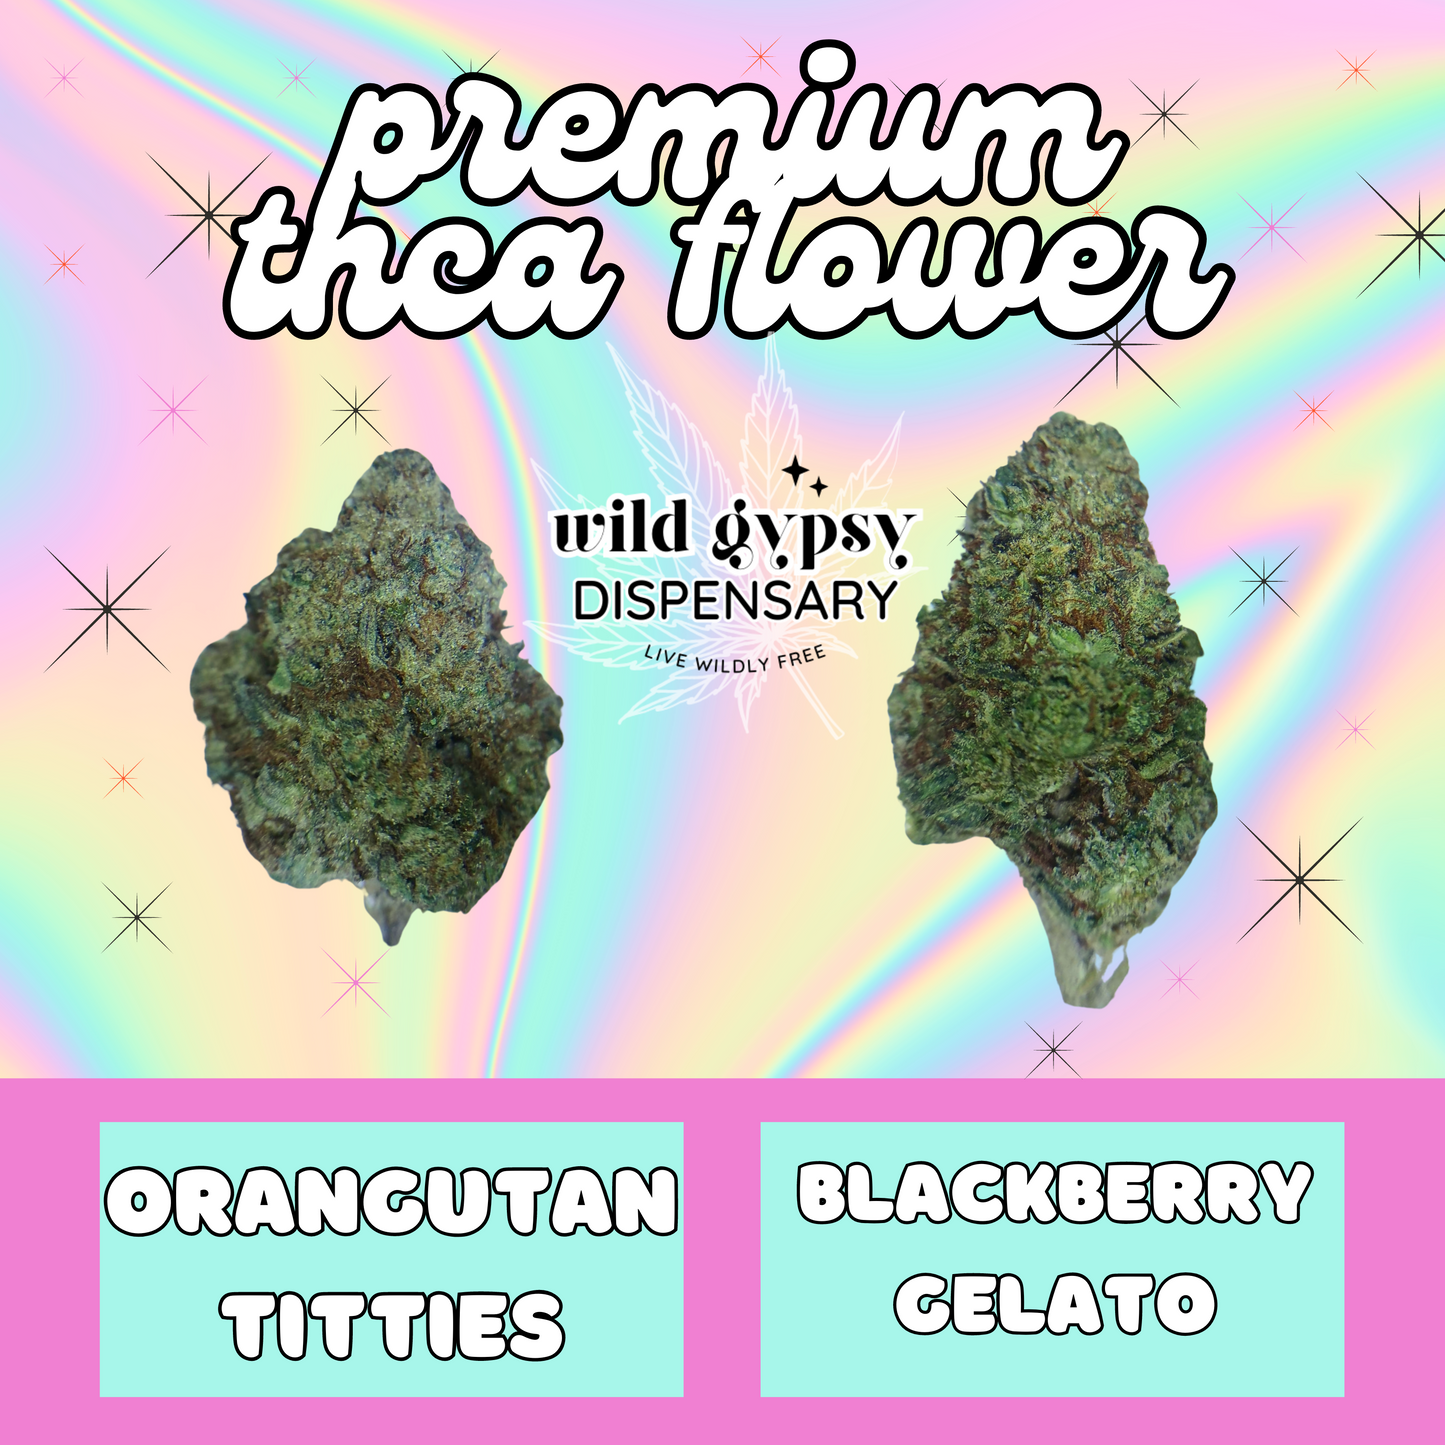 Premium THCA Flower - 3.5g. | Black Cherry Gelato